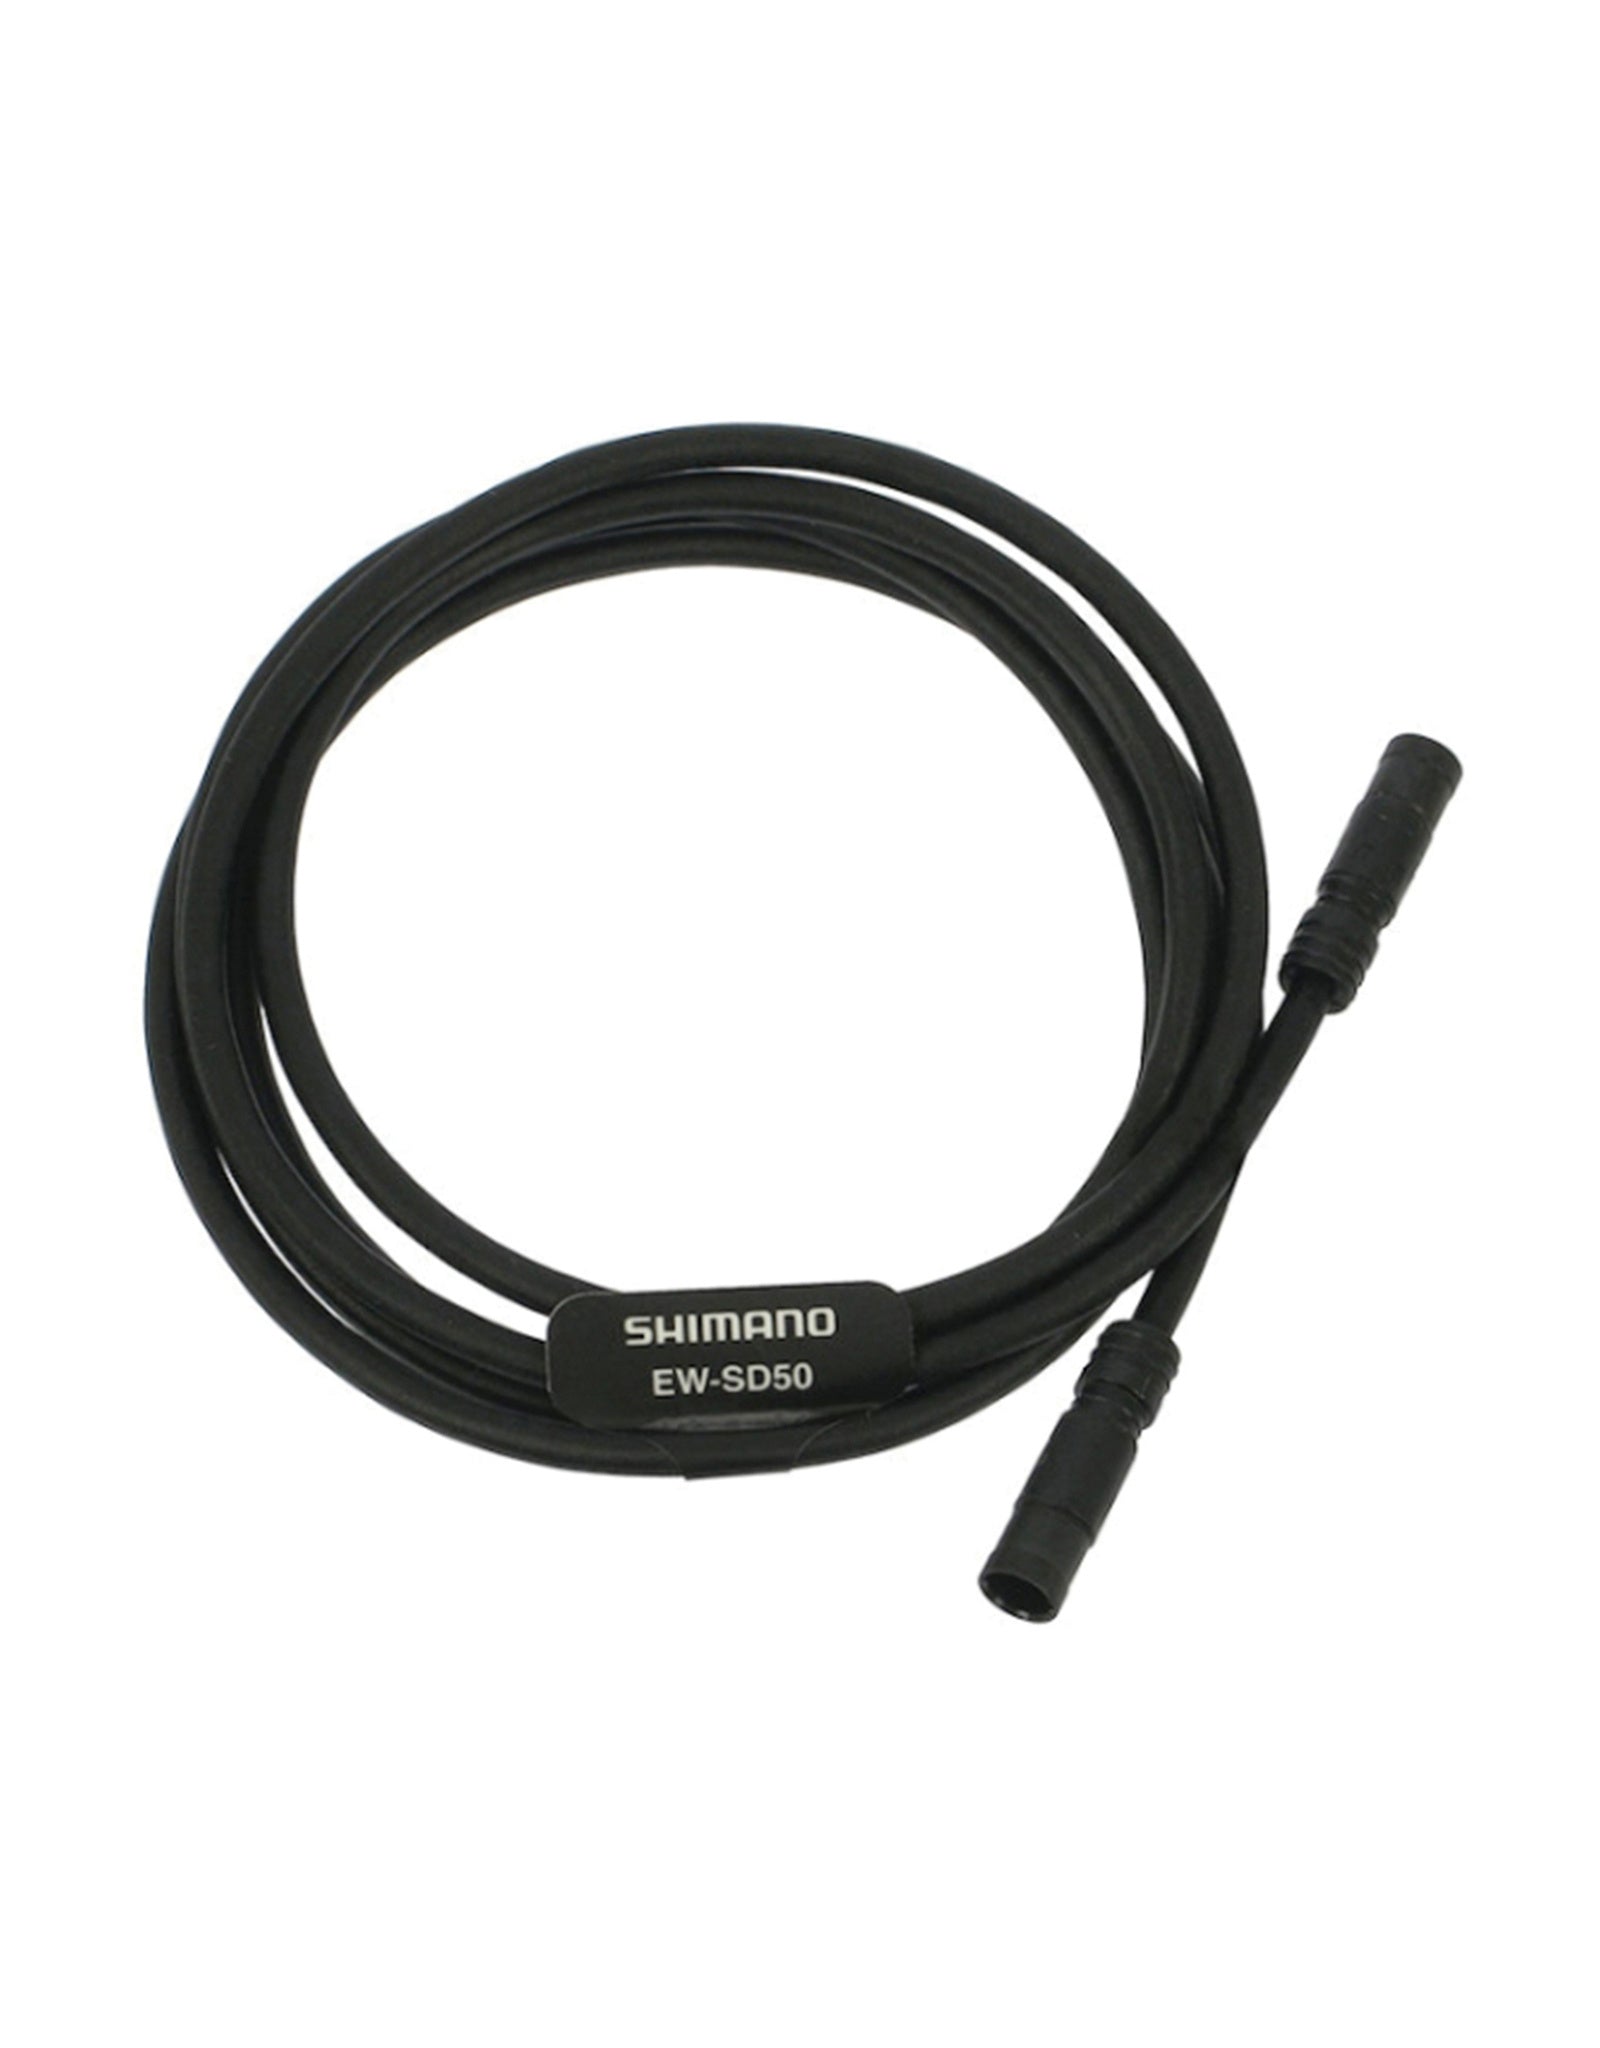 Shimano - Cable Électrique Di2 EP8 - EW-SD300 - 850MM - Noir - 210000005110